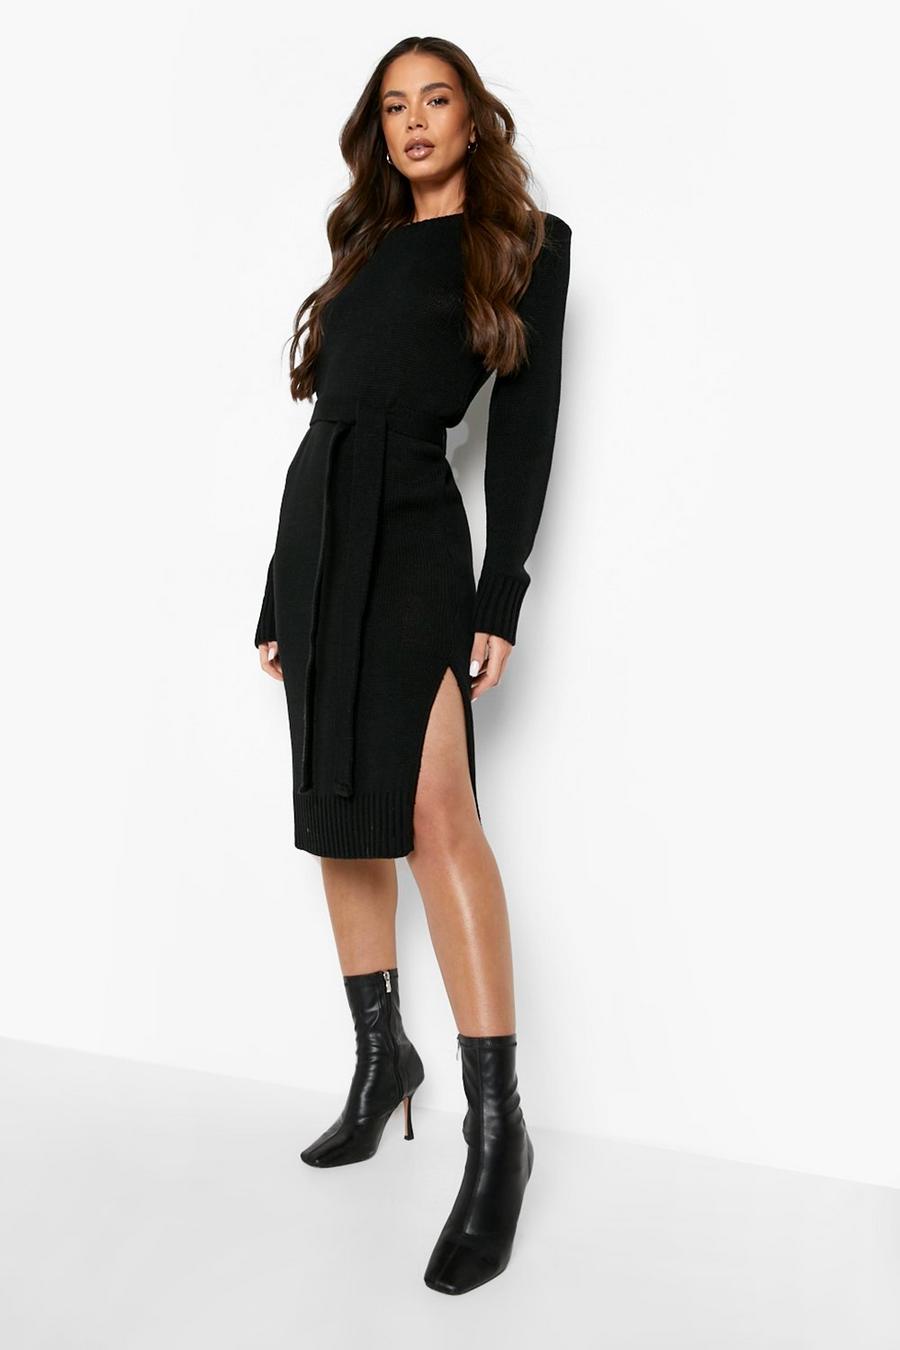 Black Belted Midi Dress